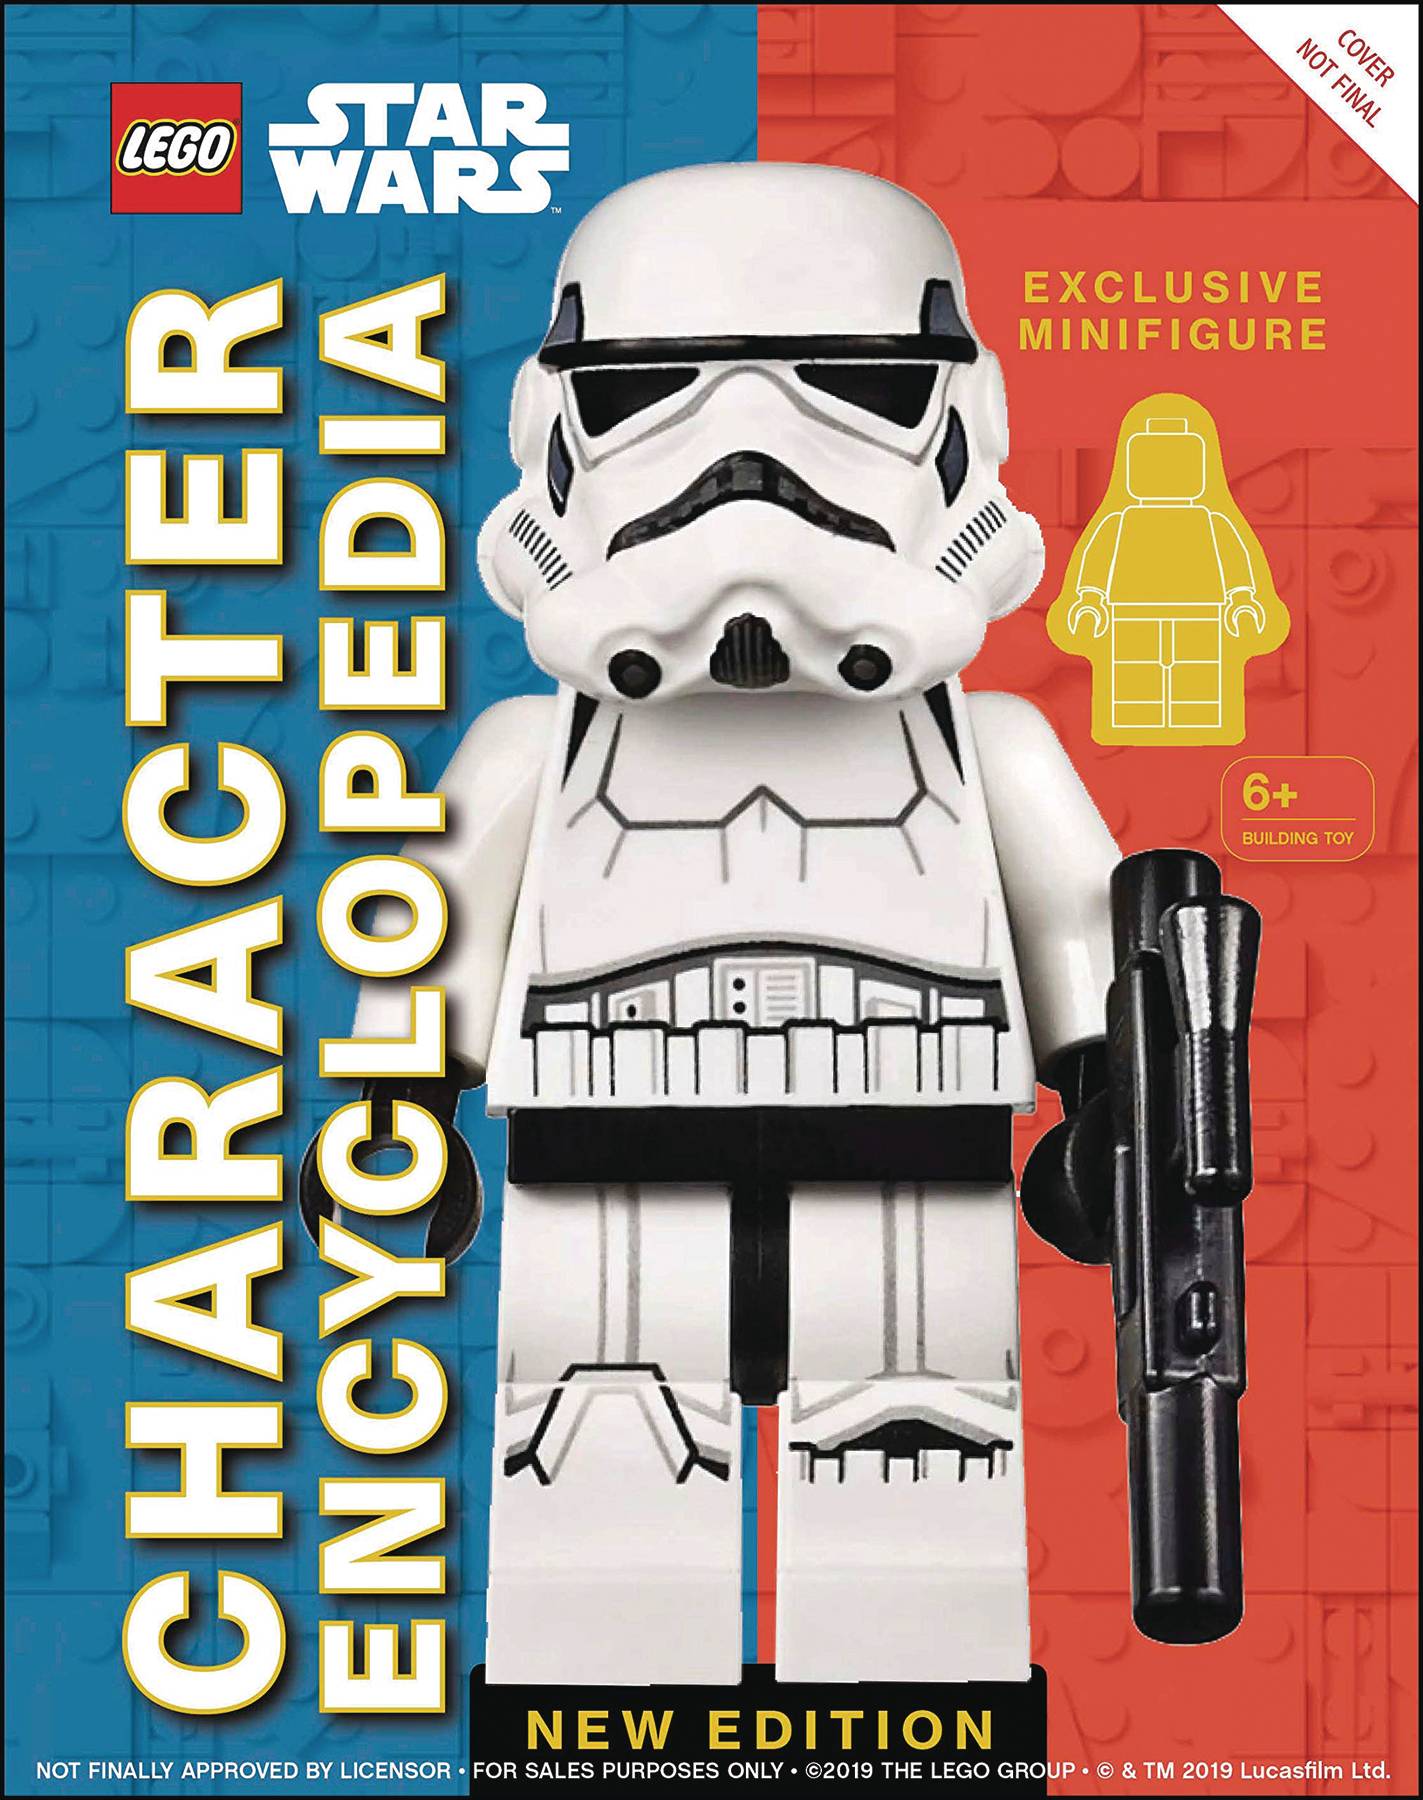 Lego Star Wars Character Encyclopedia New Edition